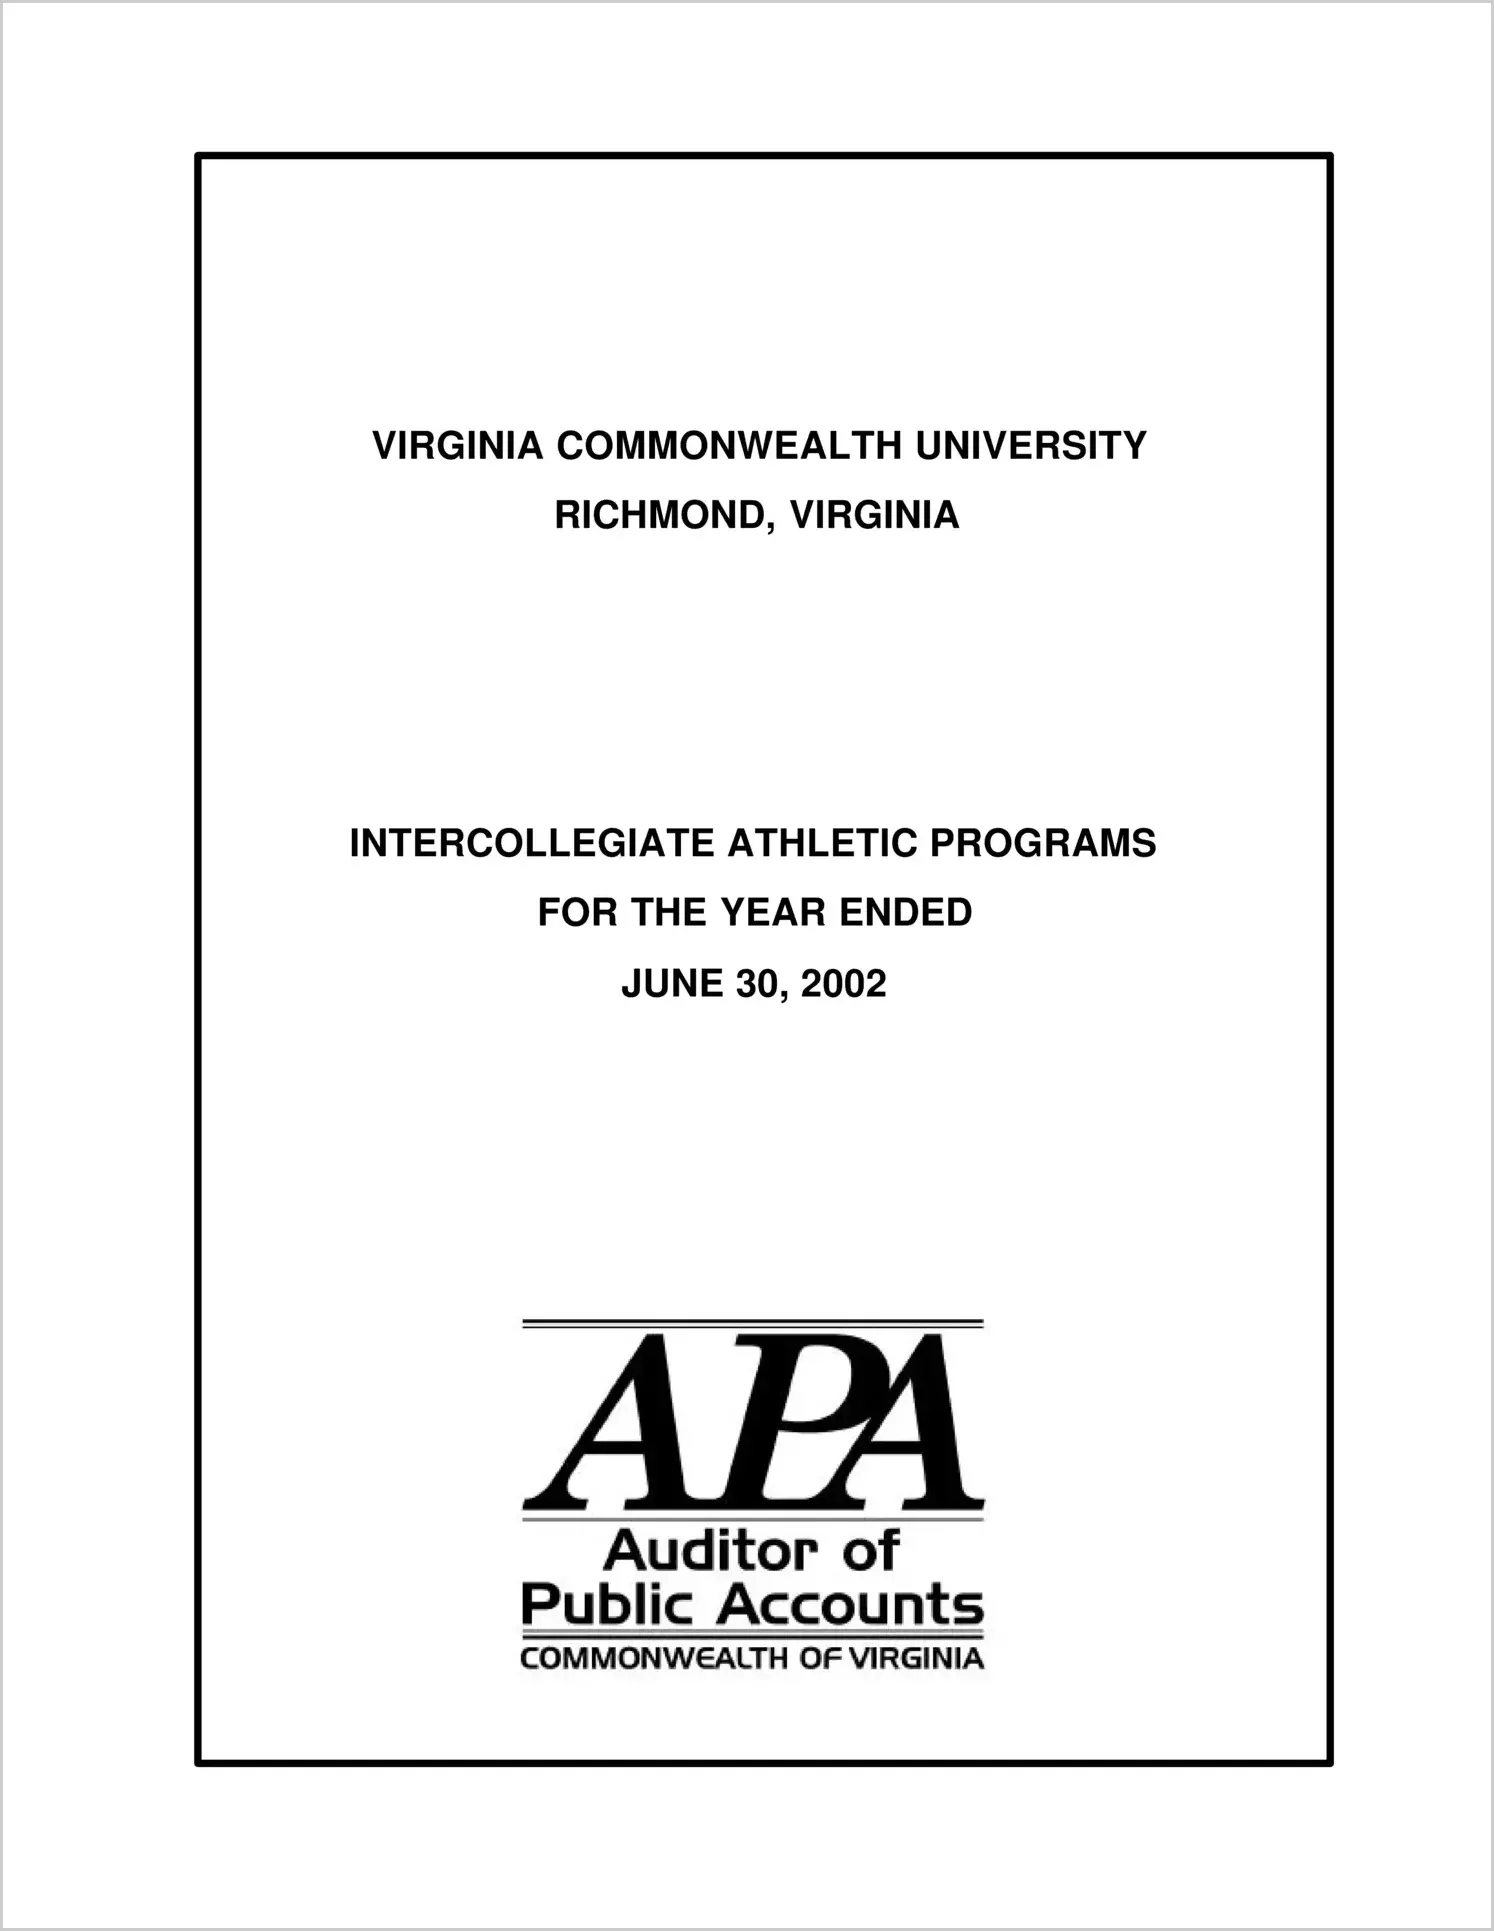 Virginia Commonwealth University Intercollegiate Athletics Programs for the year ended June 30, 2002